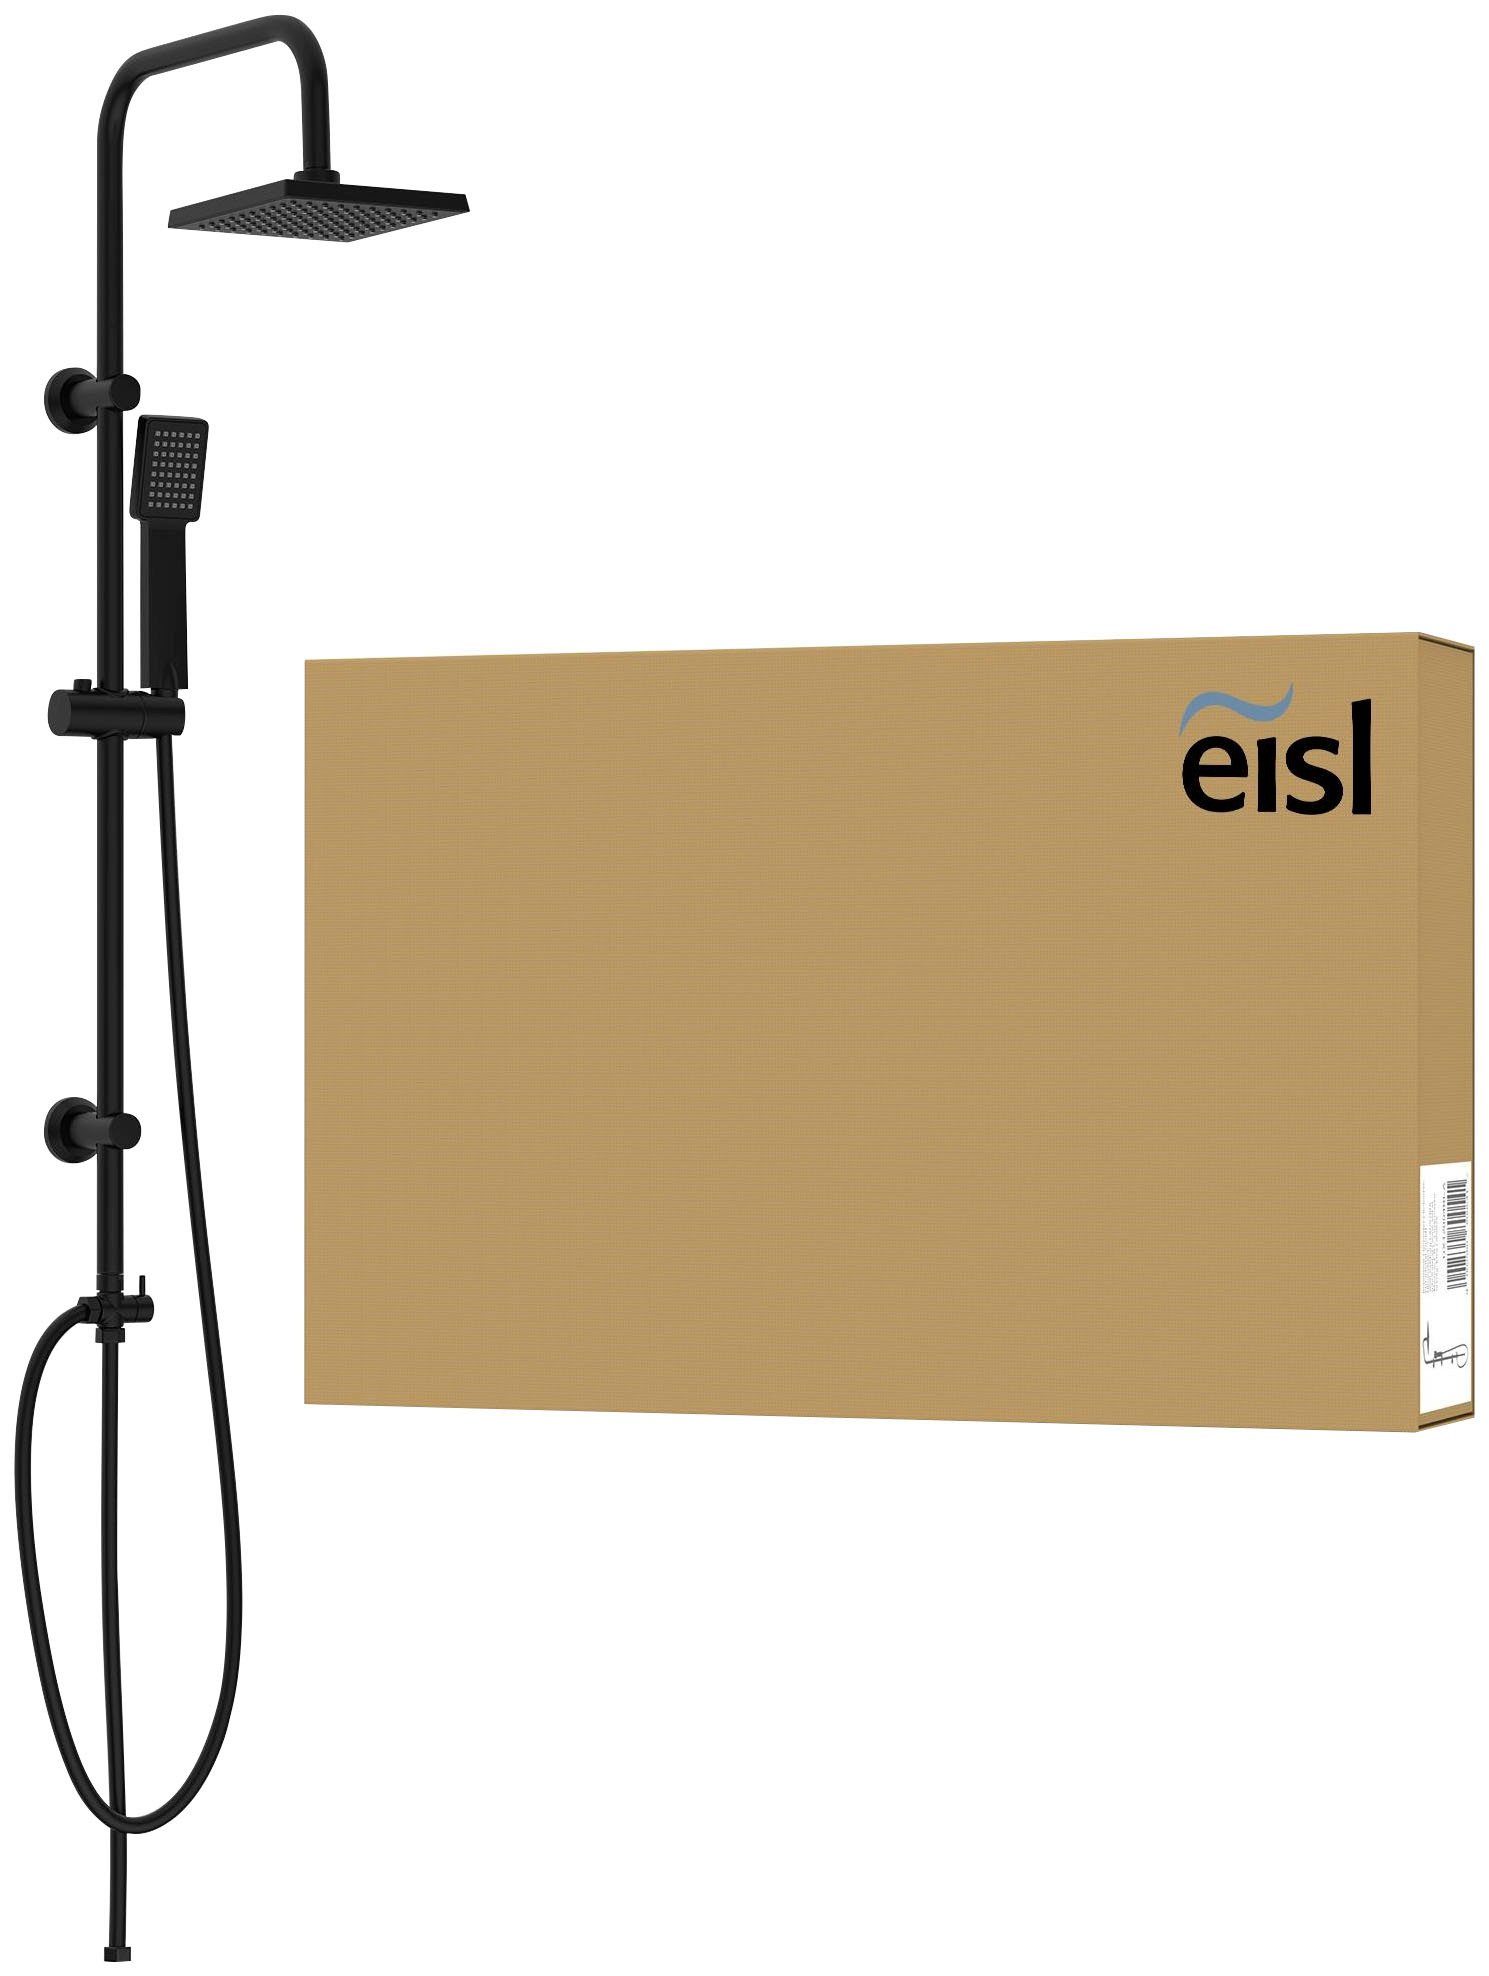 Eisl Brausegarnitur EASY cm, 2 ENERGY, / 97 Edelstahl / Höhenverstellbar Antikalk-Noppen Höhe Strahlart(en), 1 tlg